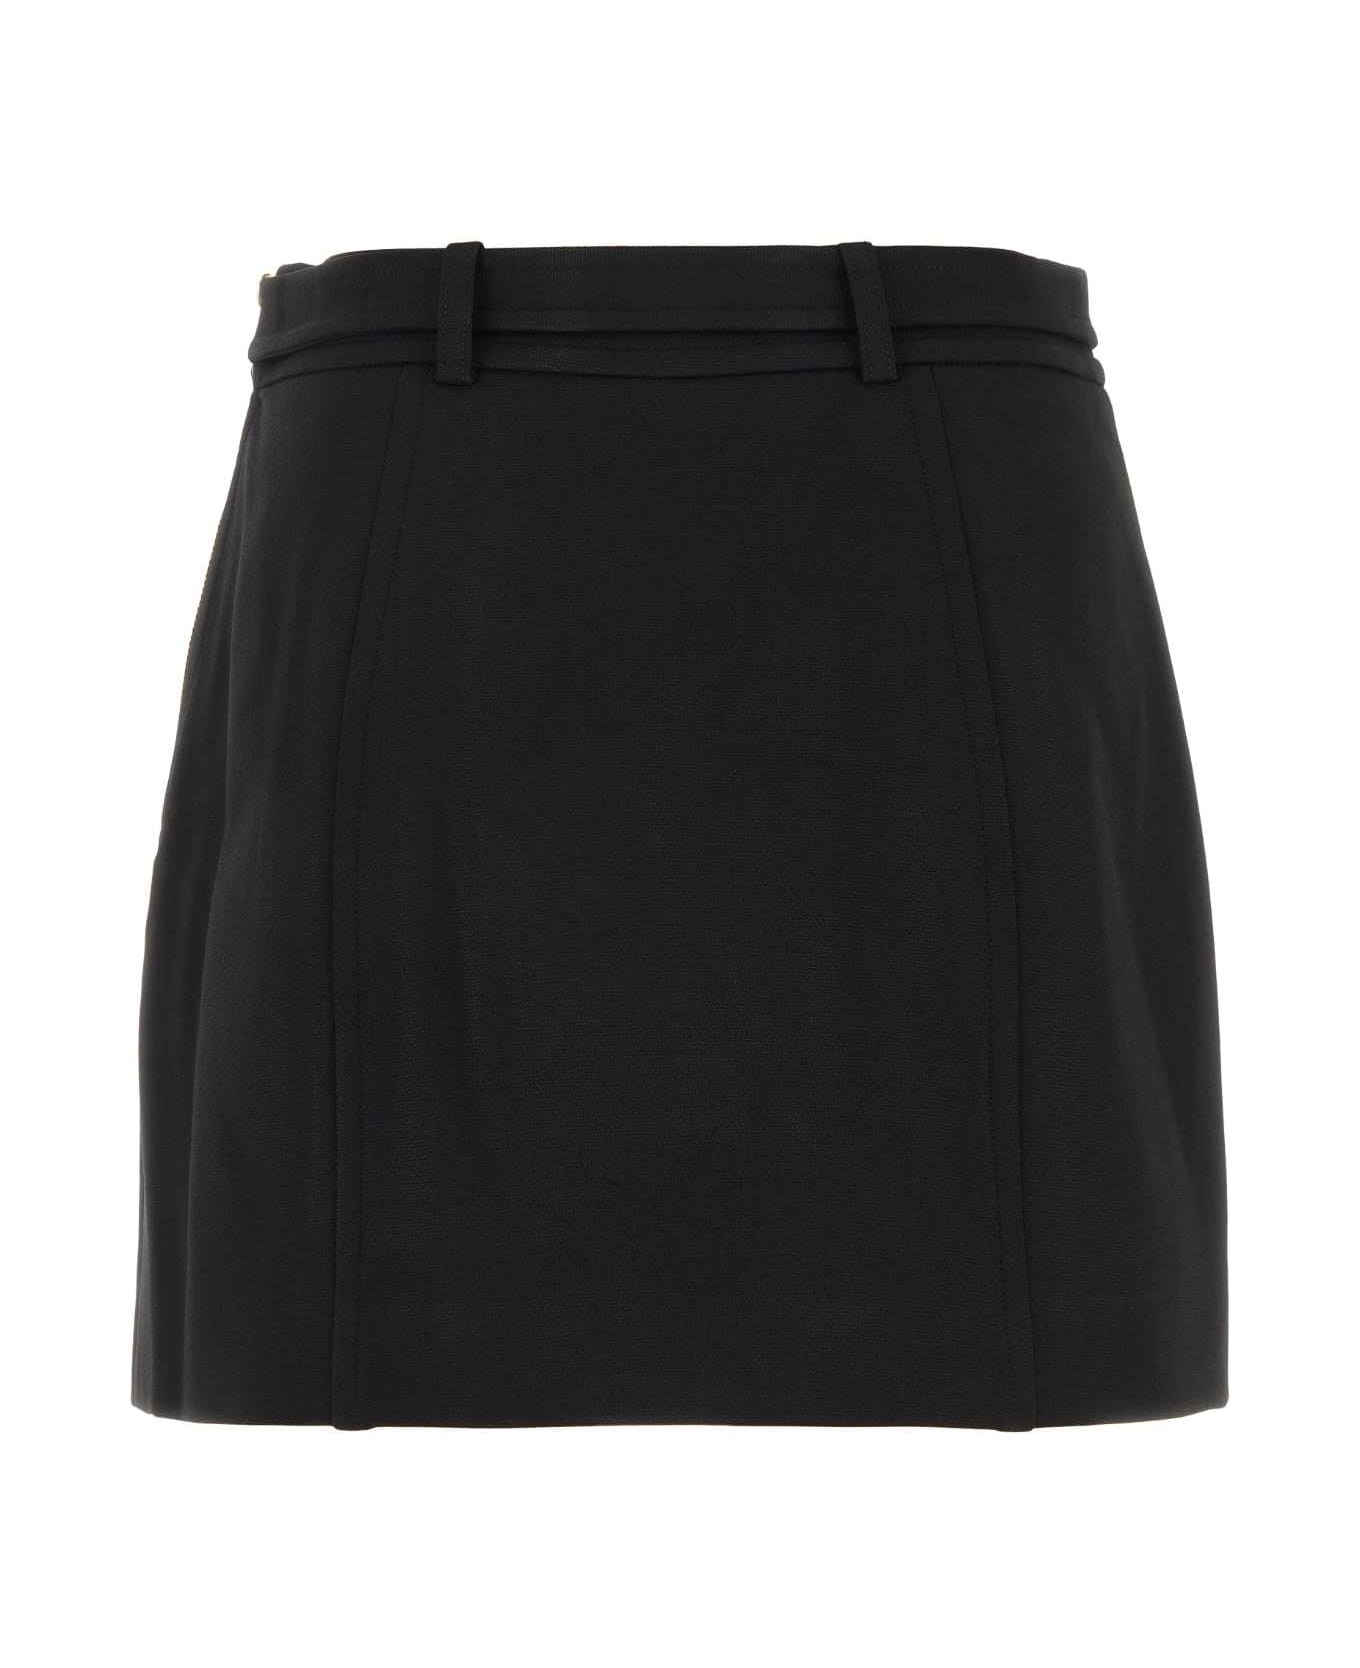 Michael Kors Stretch Crepe Belted Mini Skirt - BLACK